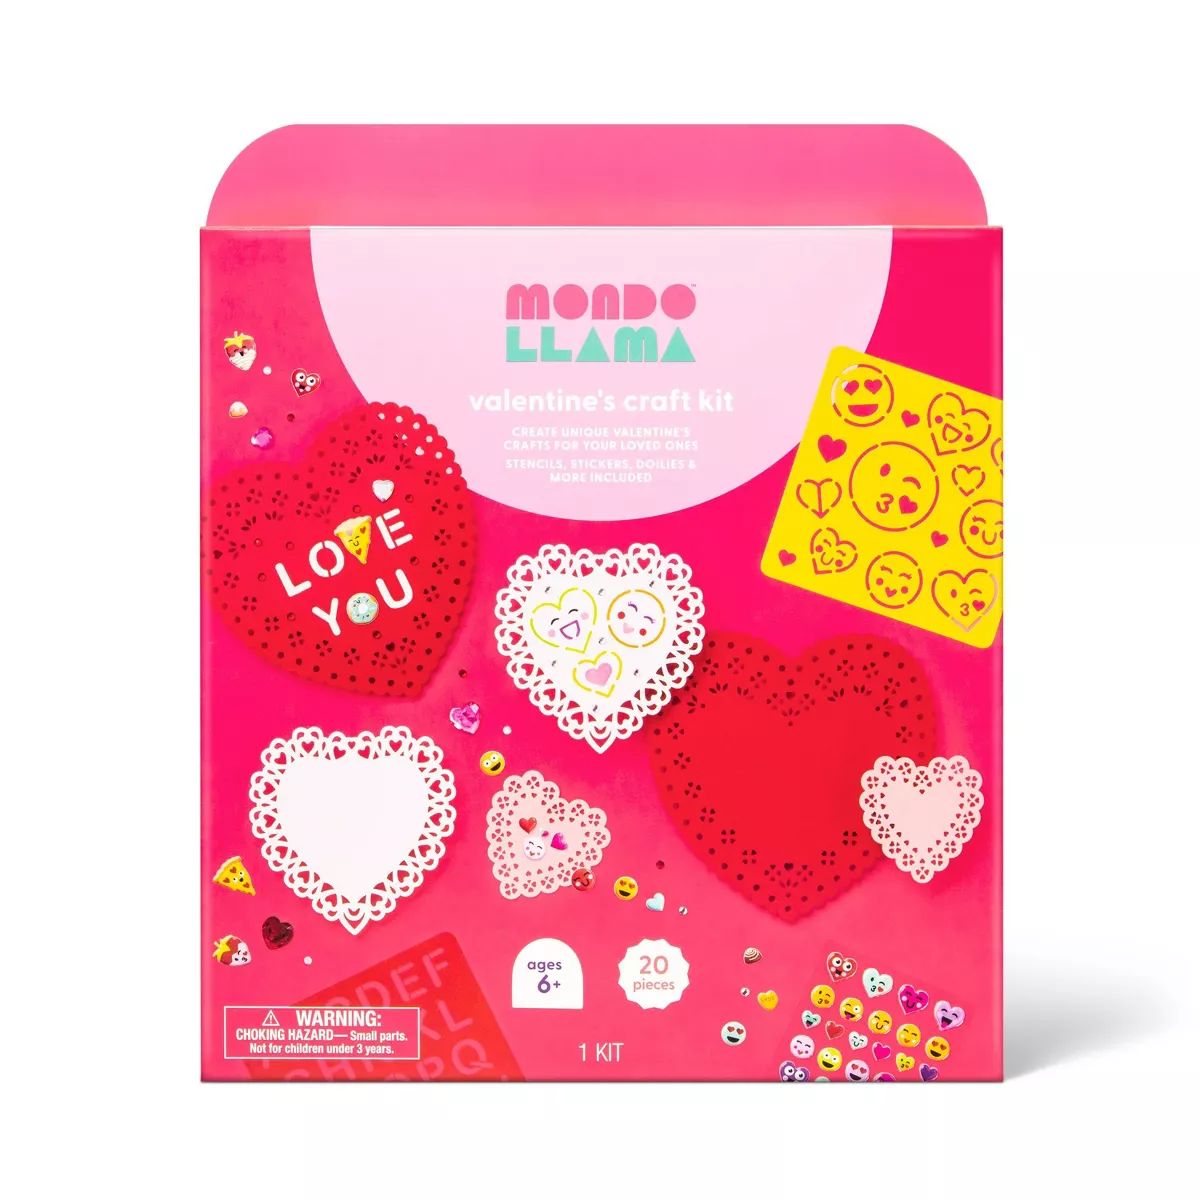 Valentine's Day Craft Kit - Mondo Llama™ | Target